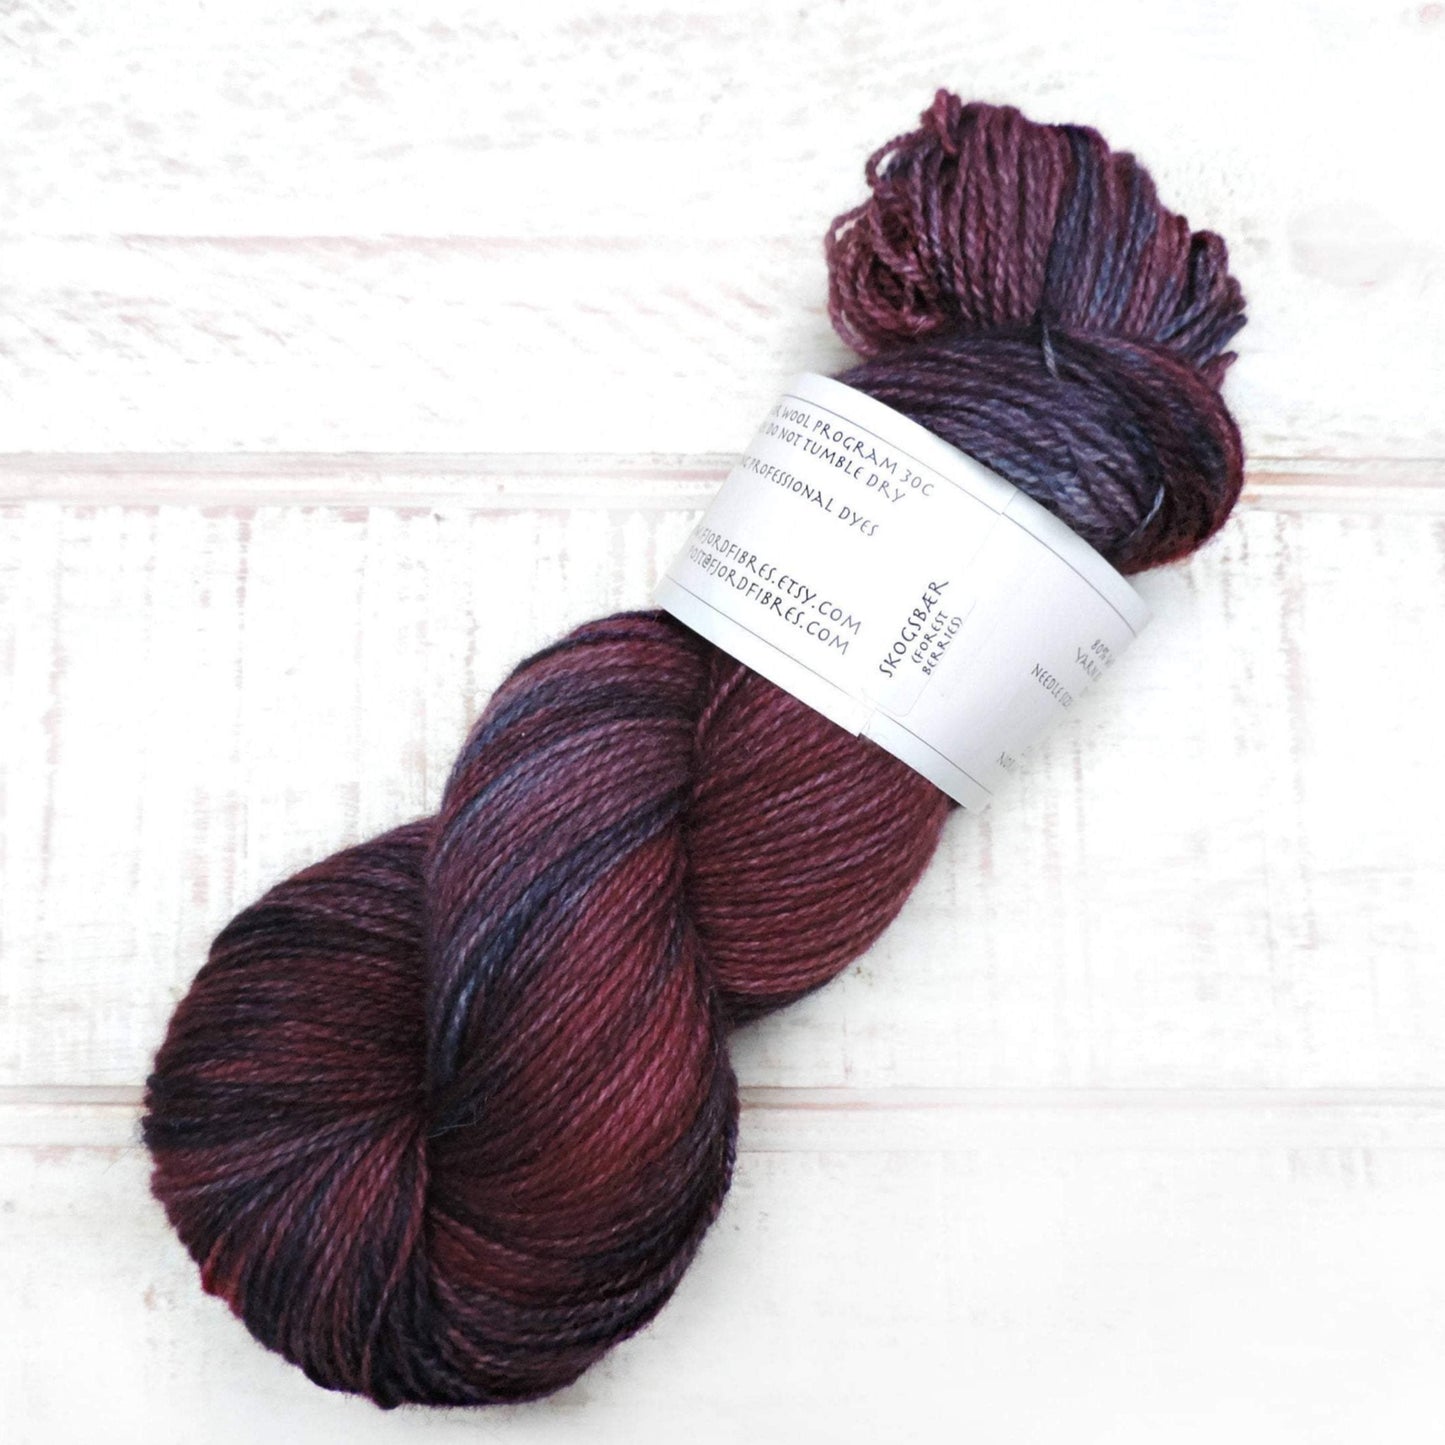 Skogsbær (Forest Berries) - Trollfjord sock - Variegated Yarn - Hand dyed yarn